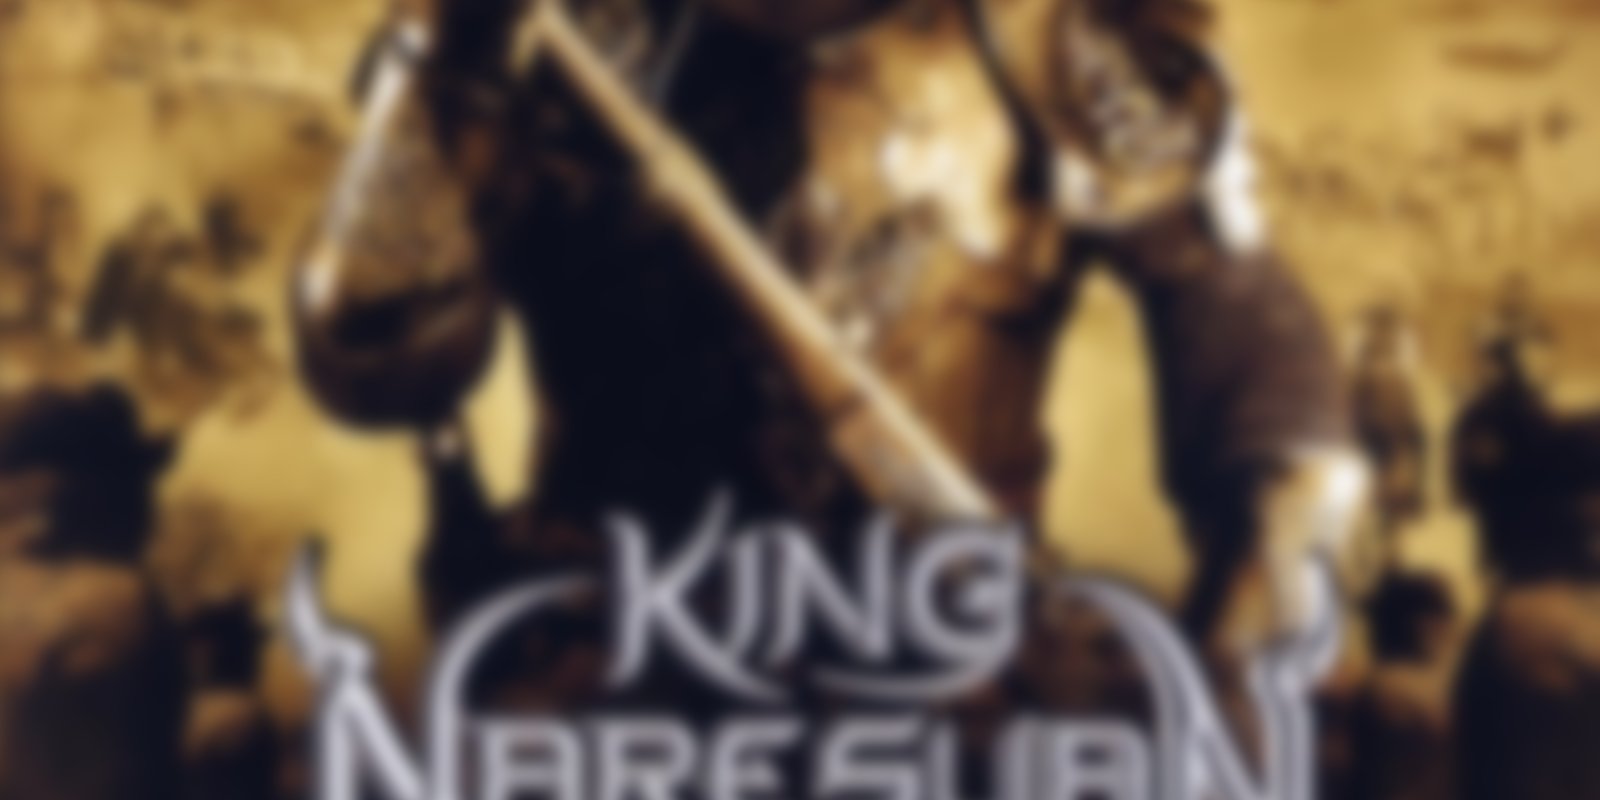 King Naresuan